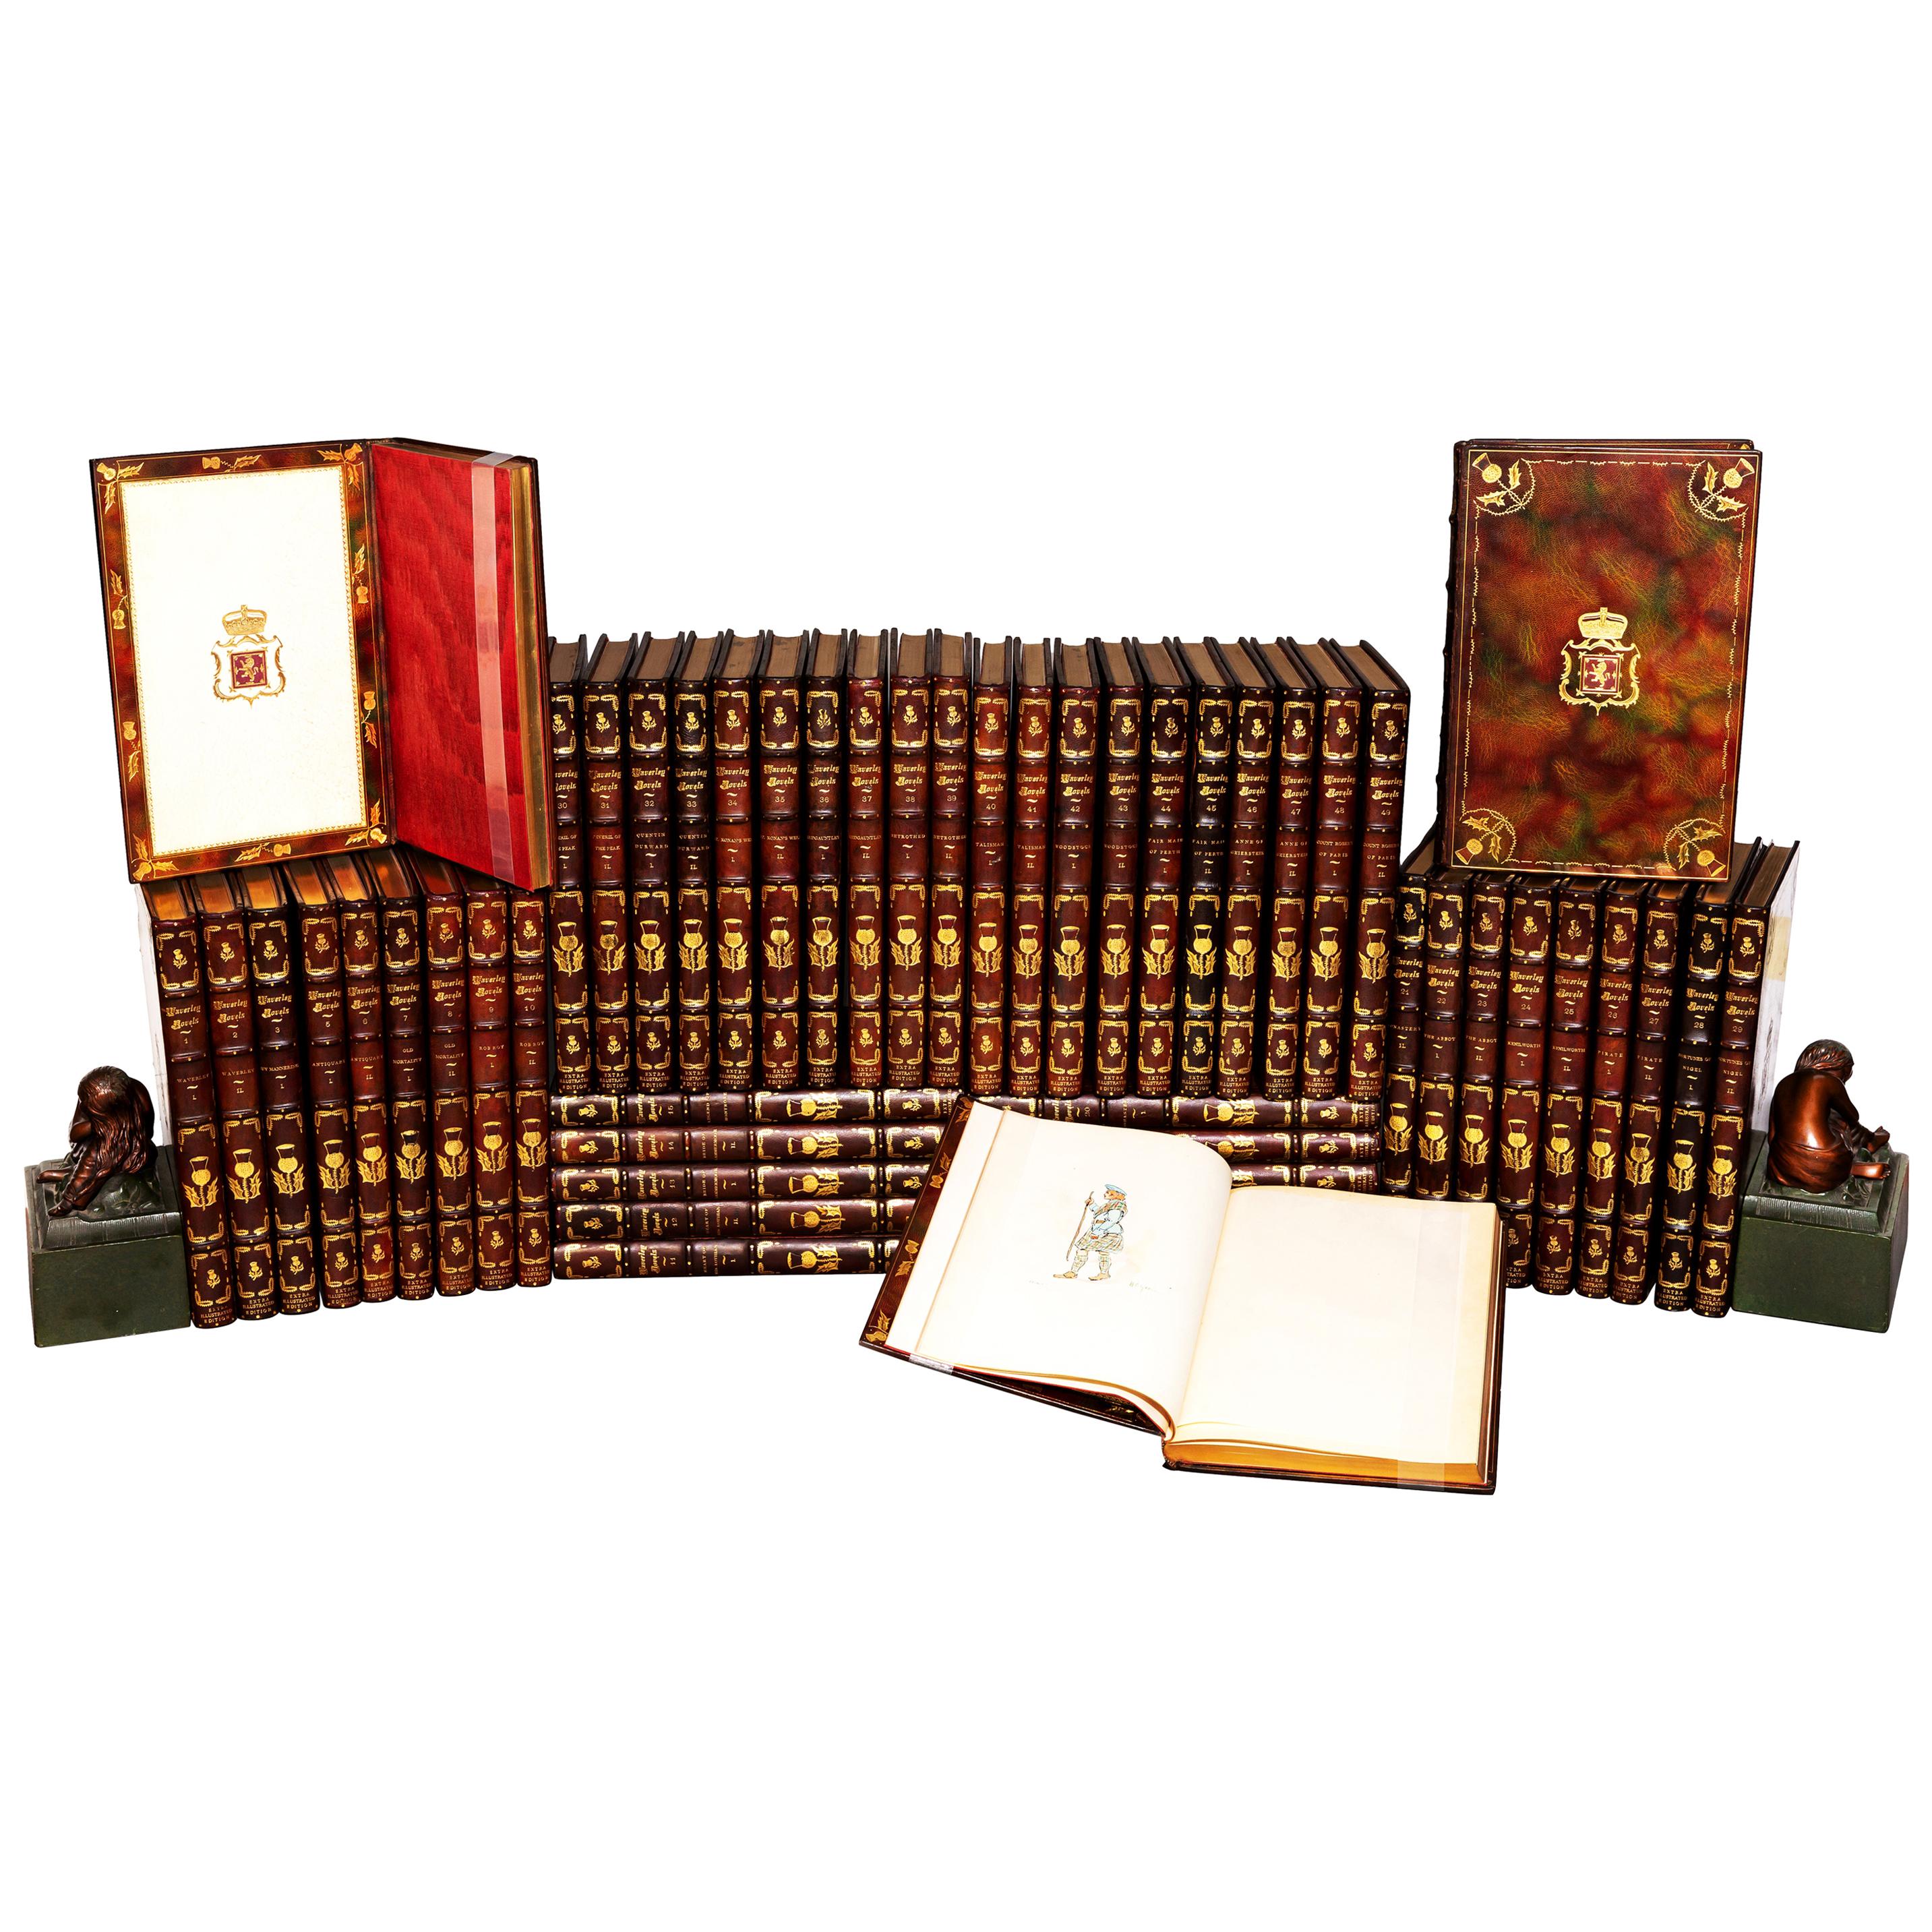 Sir Walter Scott, Waverley Novels, “Extra Illustrated Copy”